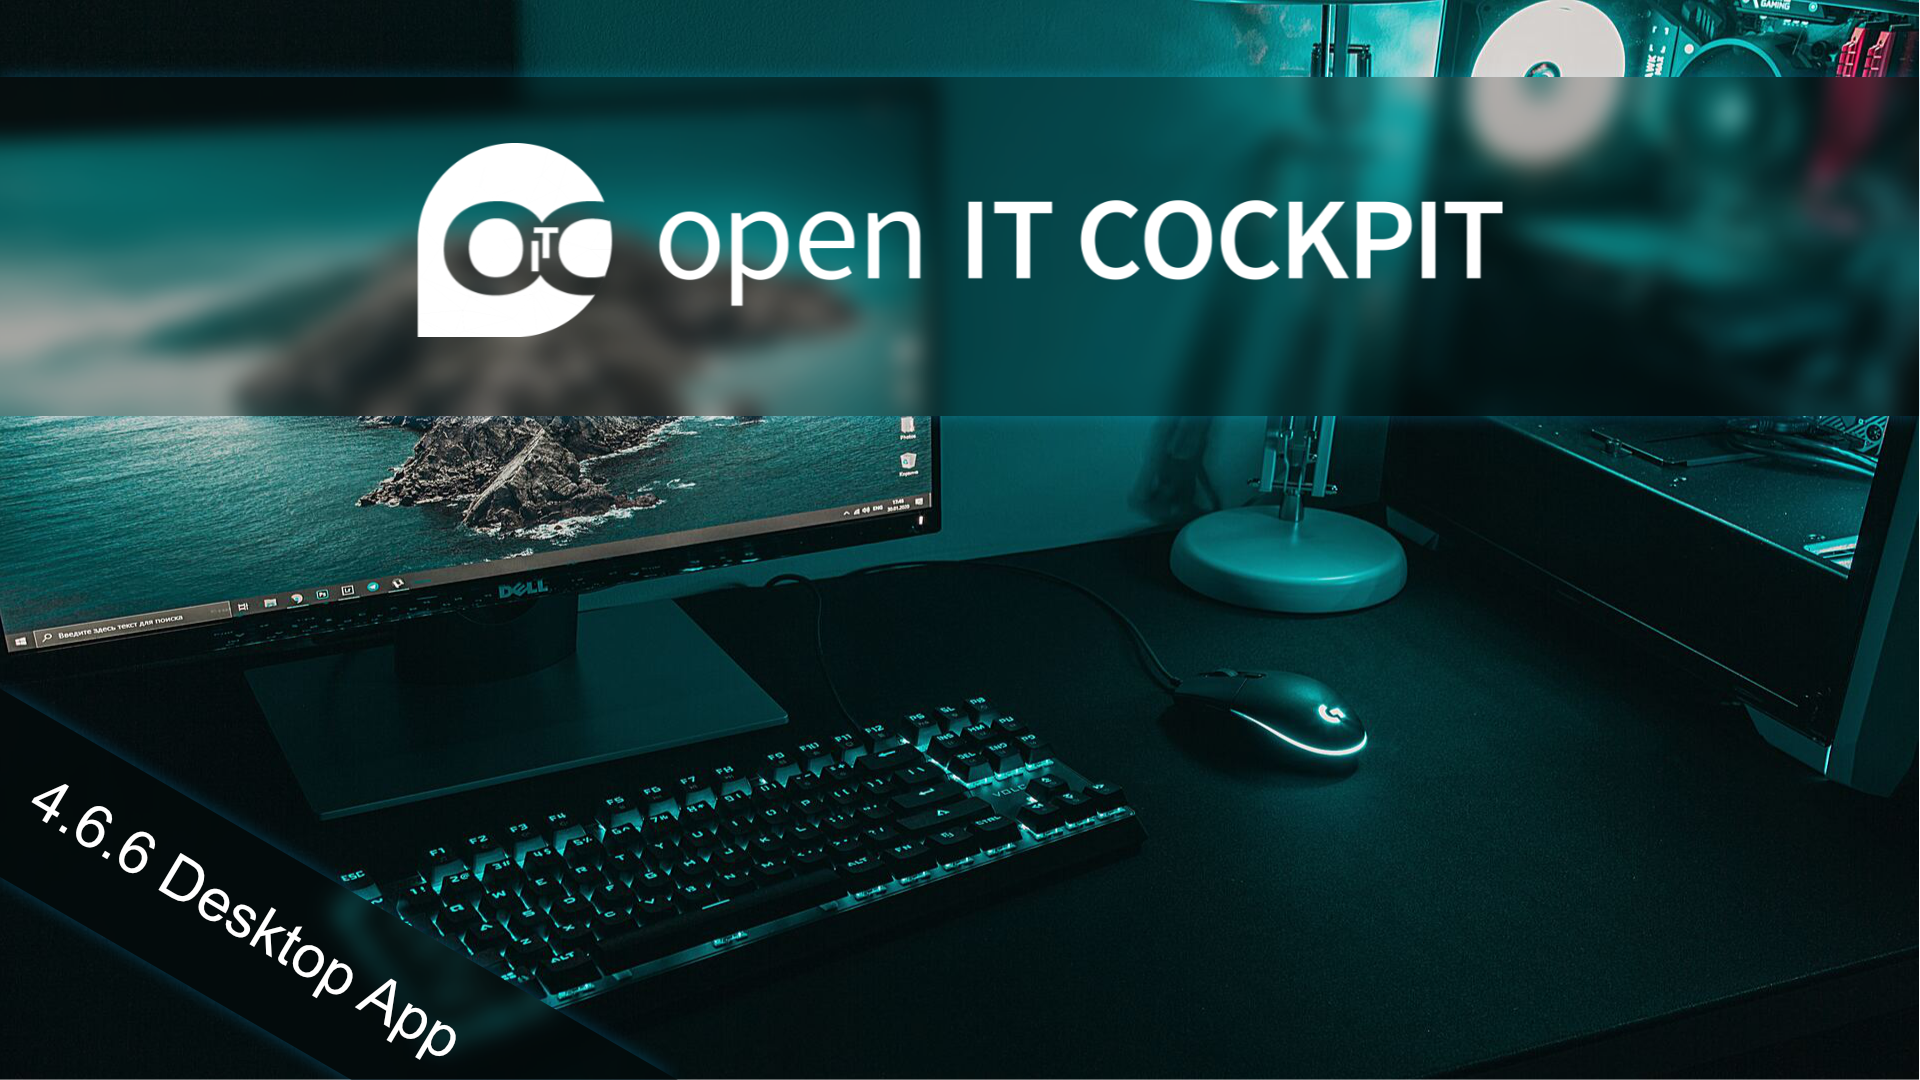 openITCOCKPIT 4.6.6_desktop released